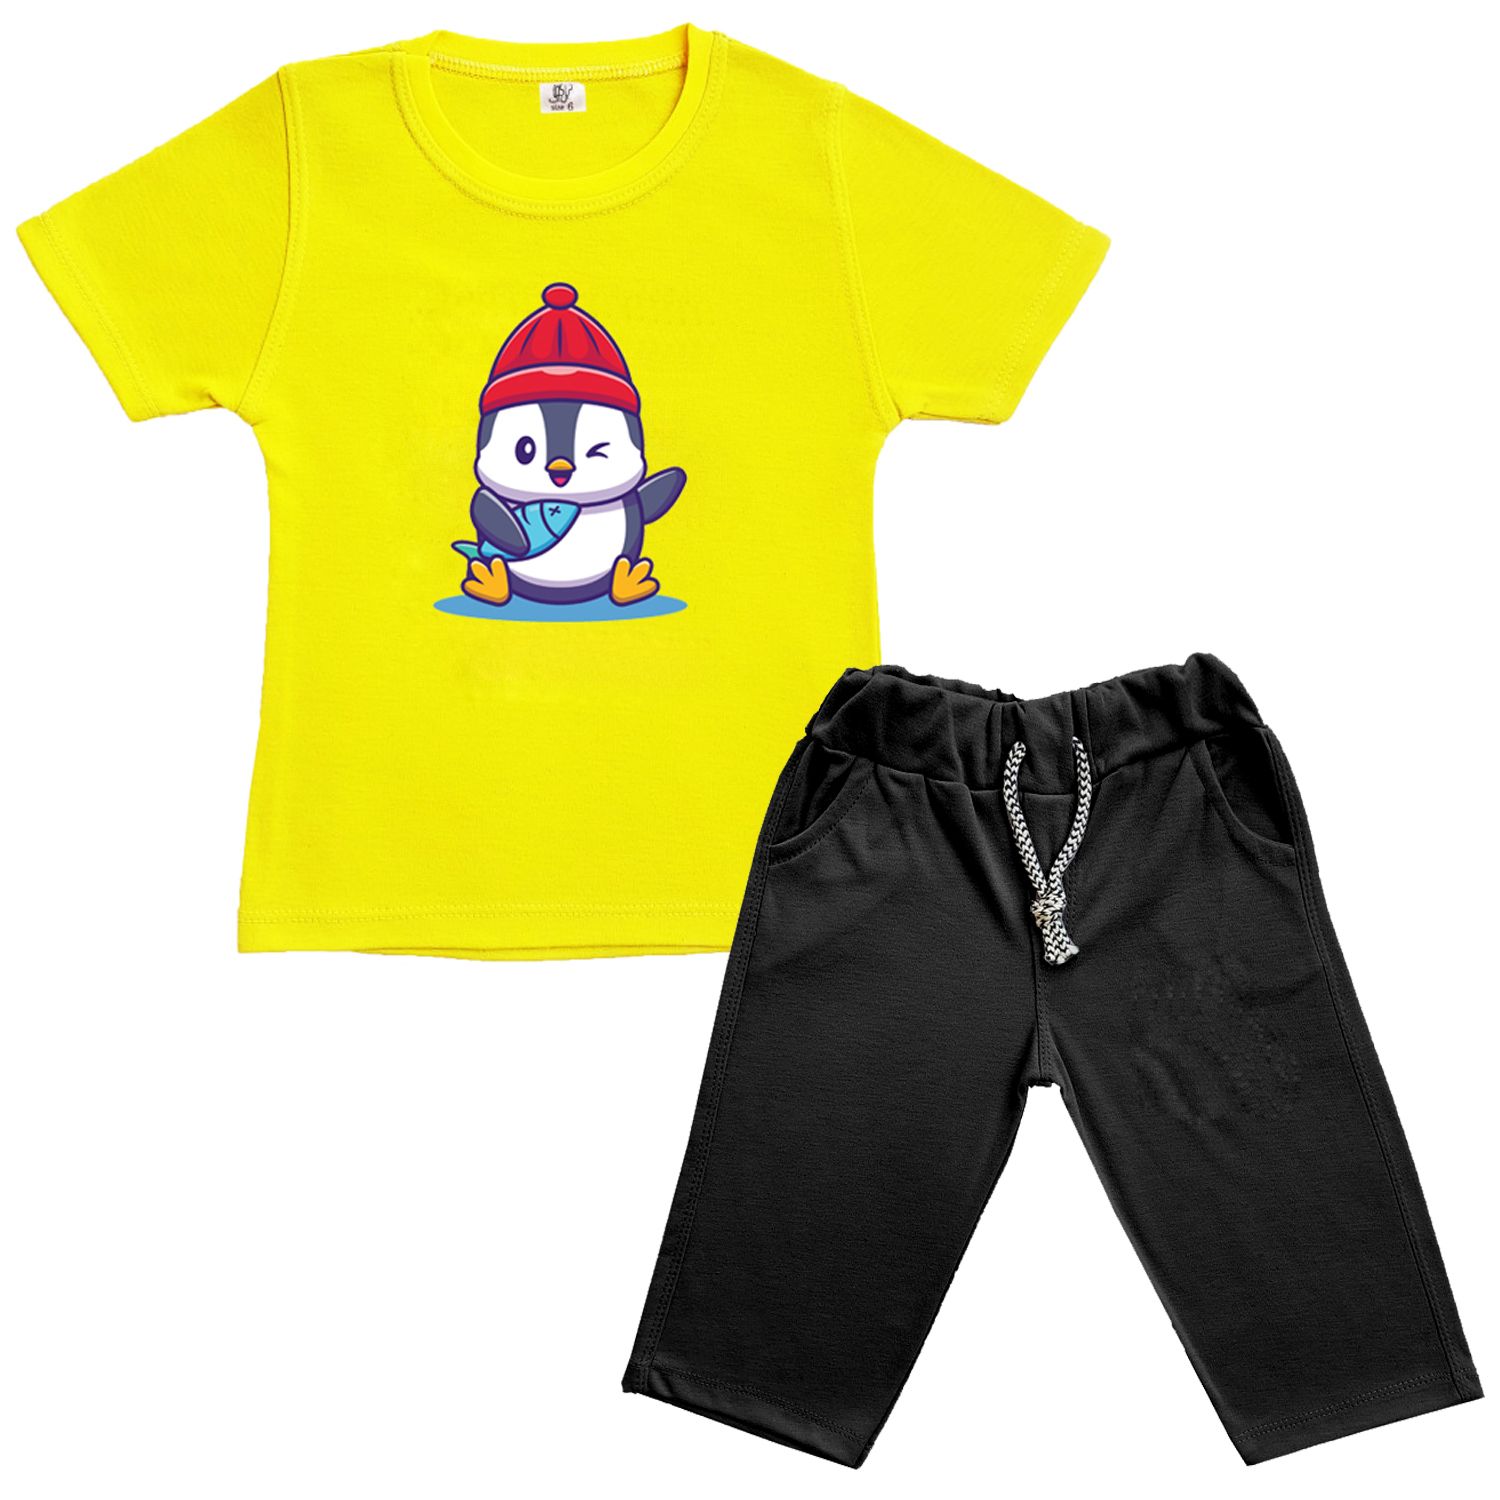 ست تی شرت و شلوارک بچگانه نیل کوک مدل Summer Fun -  - 1